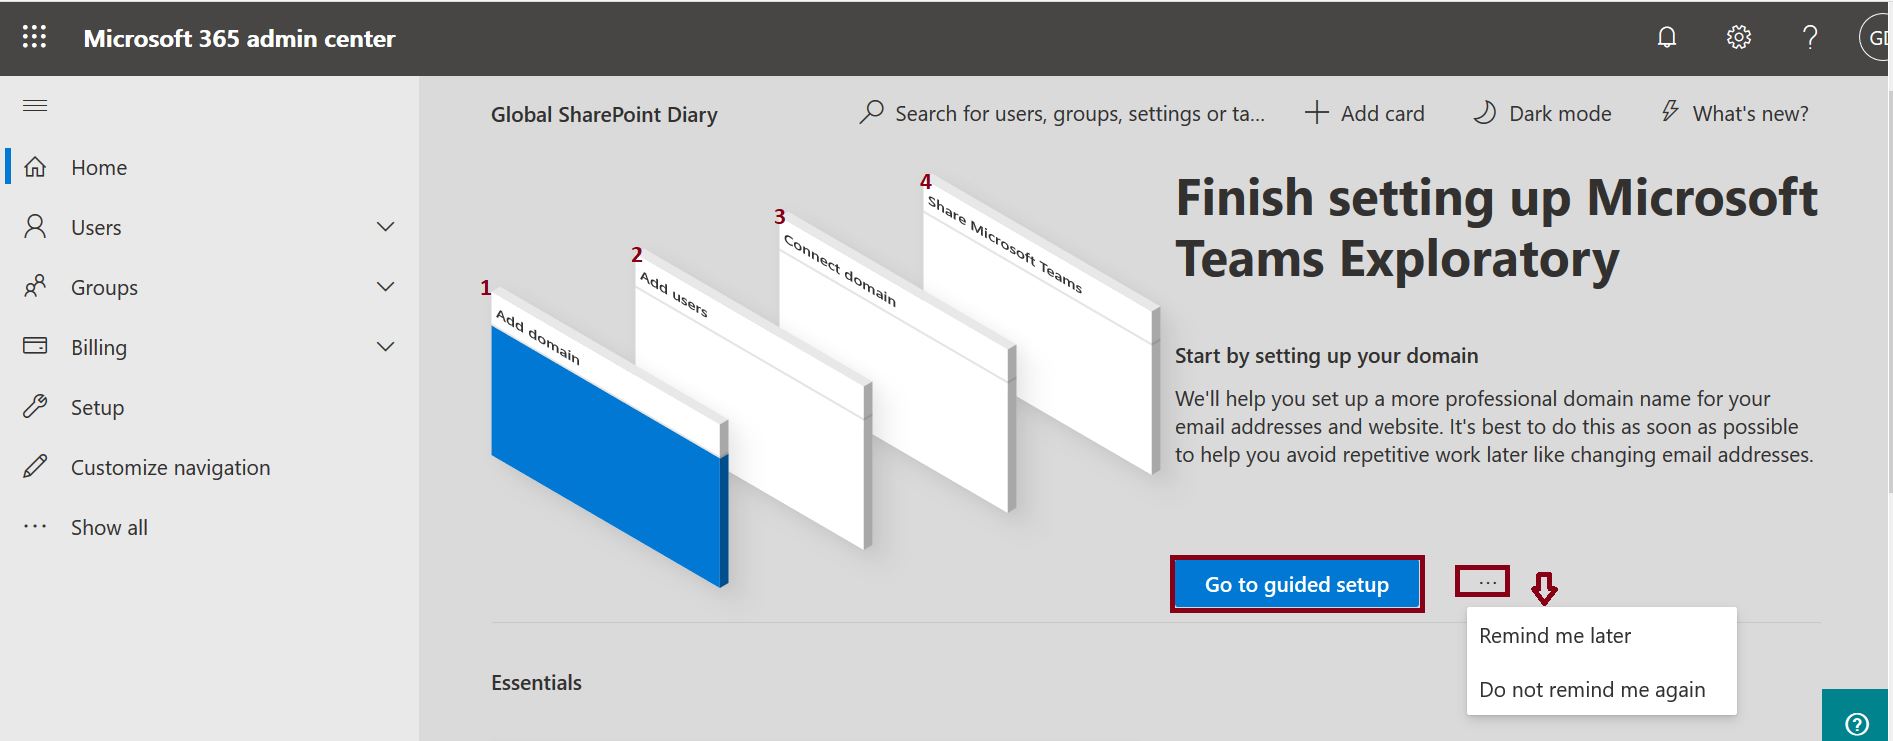 Finish setting up ‎Microsoft Teams Exploratory‎ steps